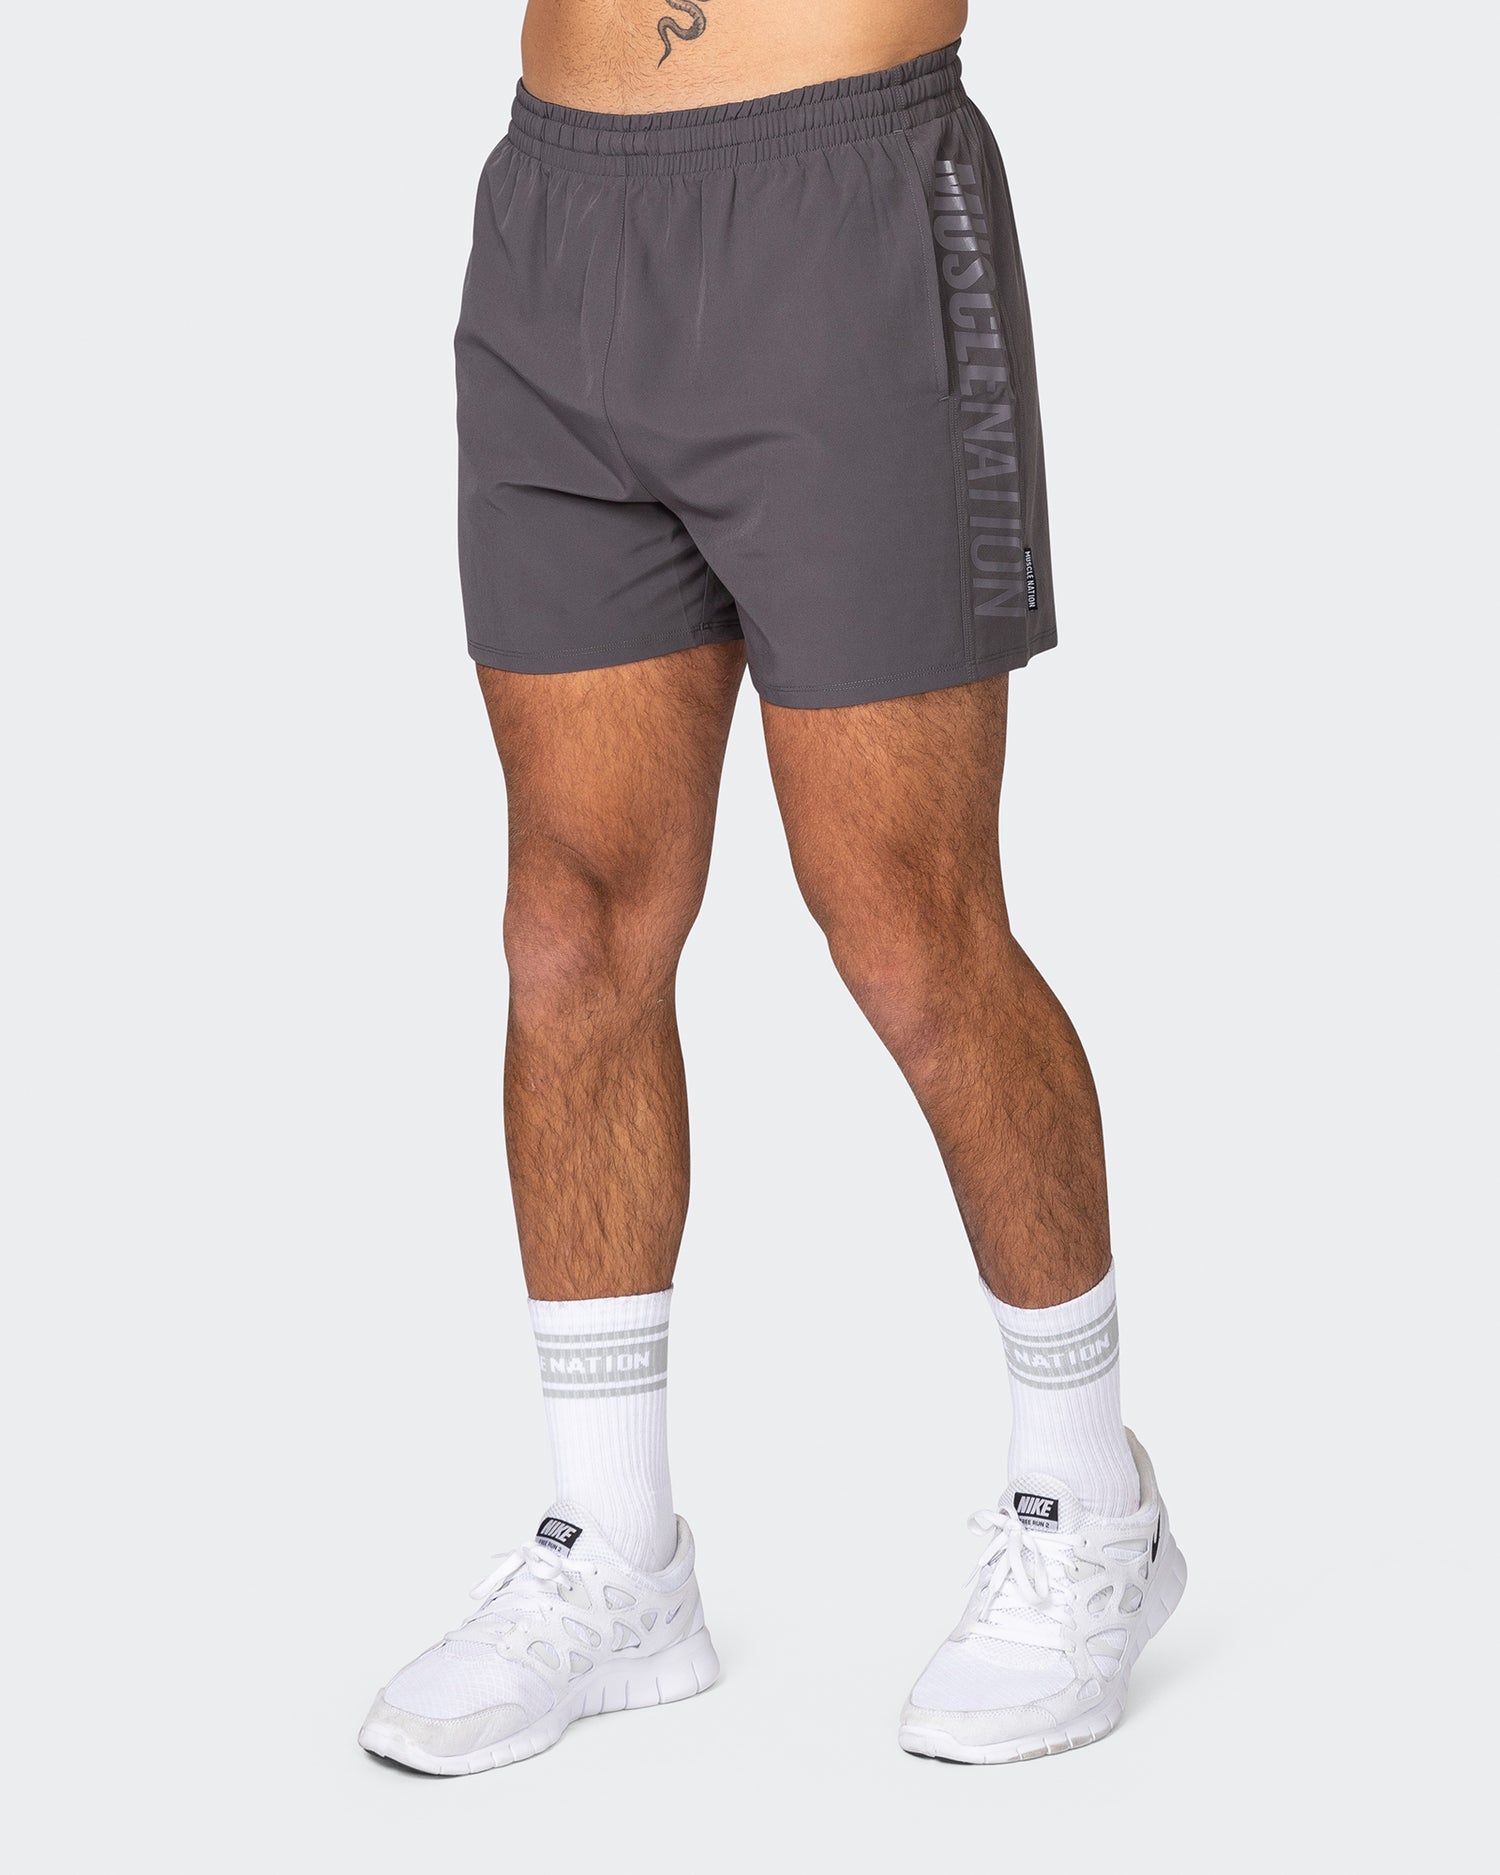 Function 4" Shorts - Graphite